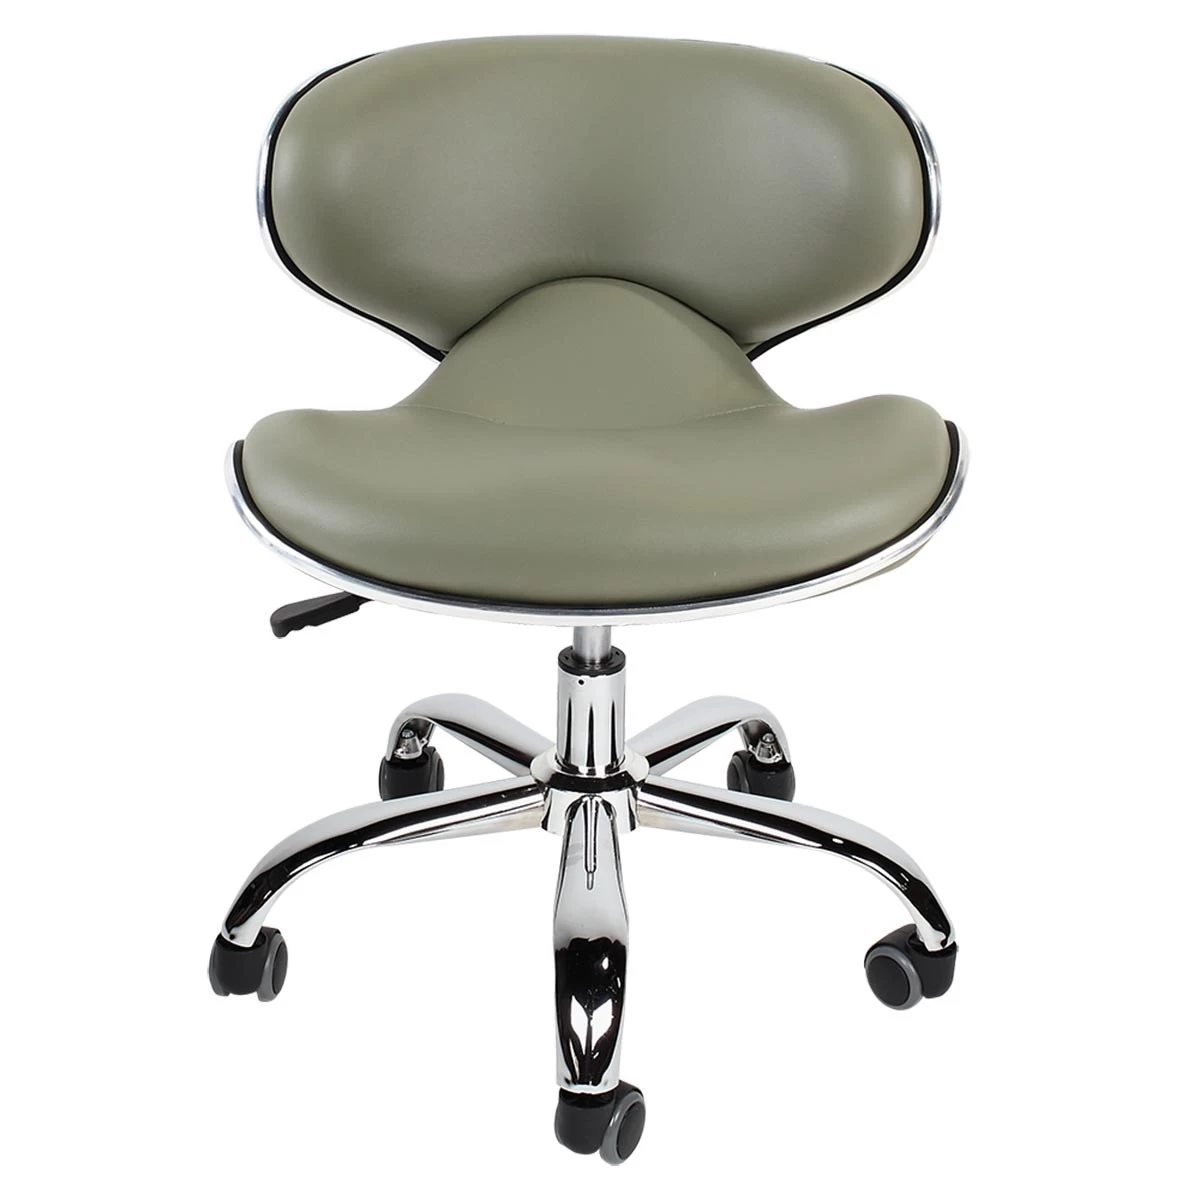 luxurious salon master black pedicure technician chair with adjustable hydraulic pump